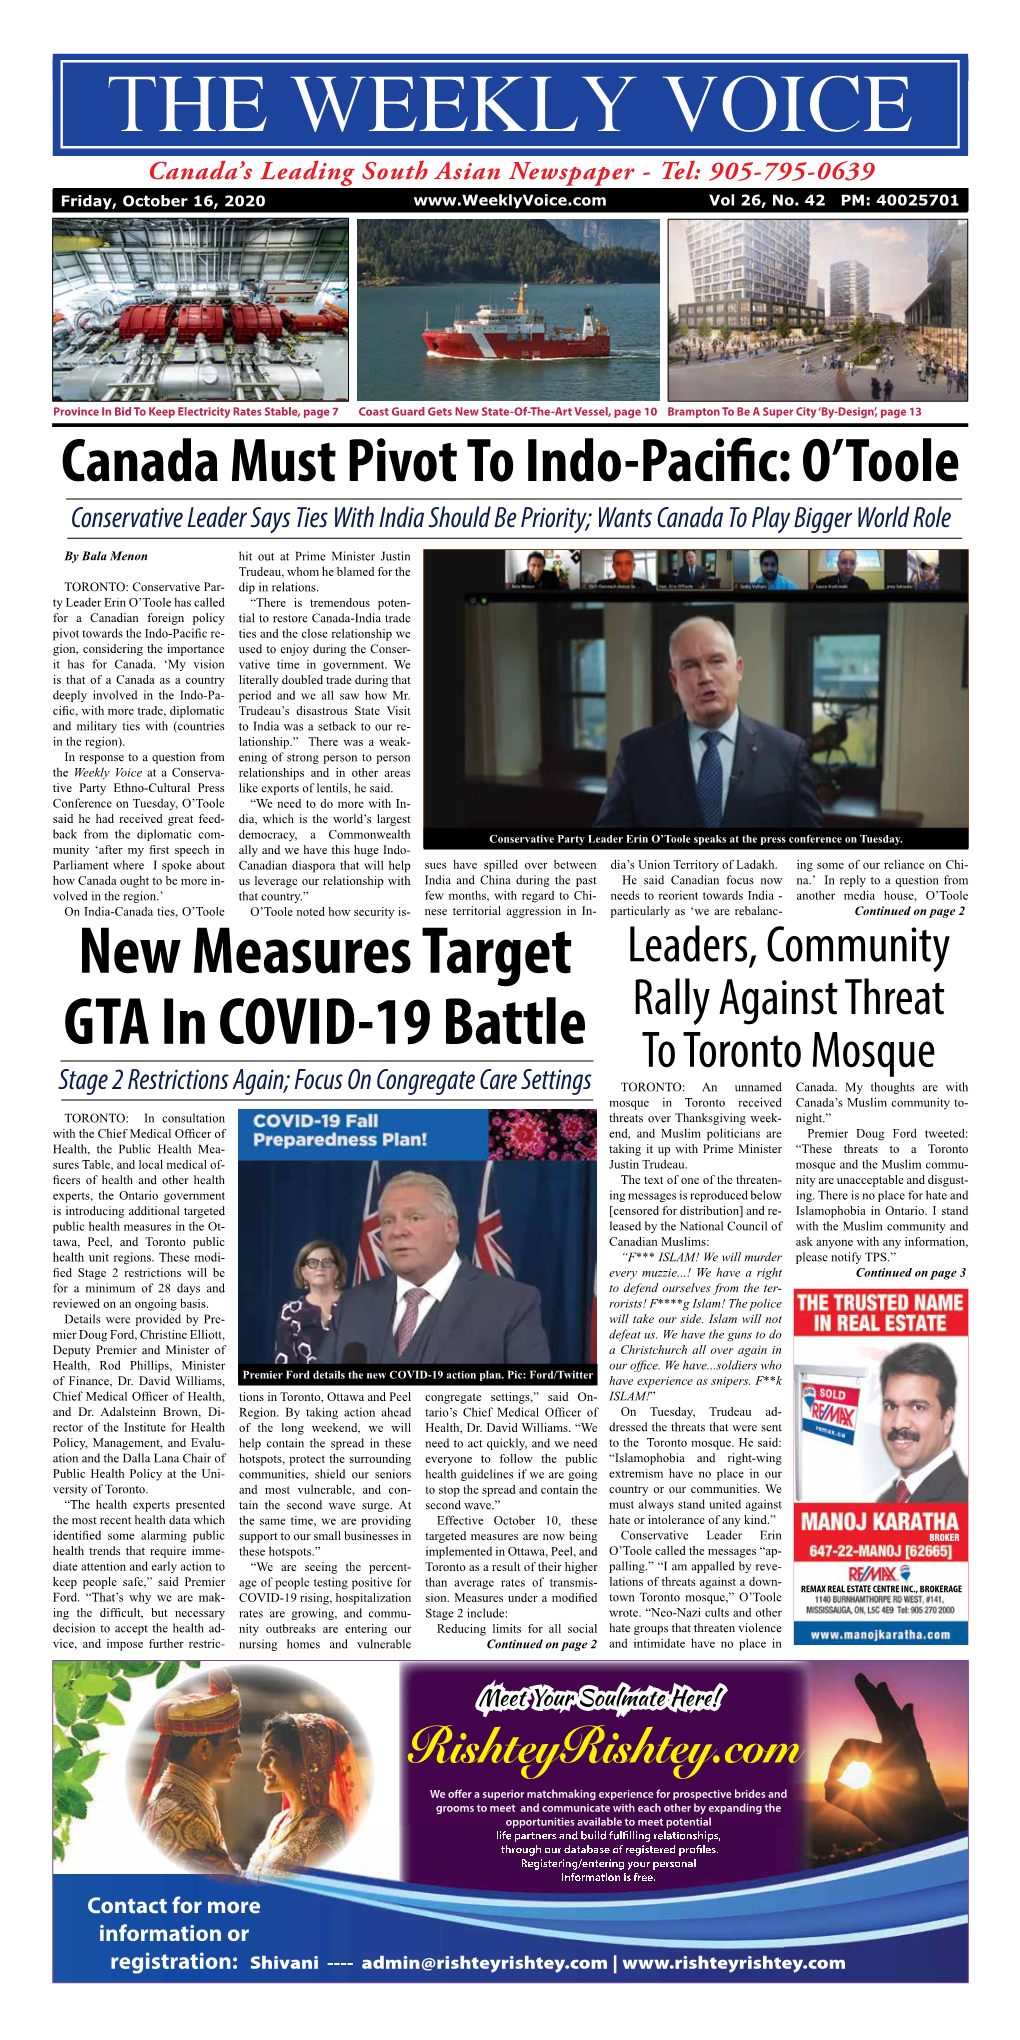 New Measures Target GTA in COVID-19 Battle